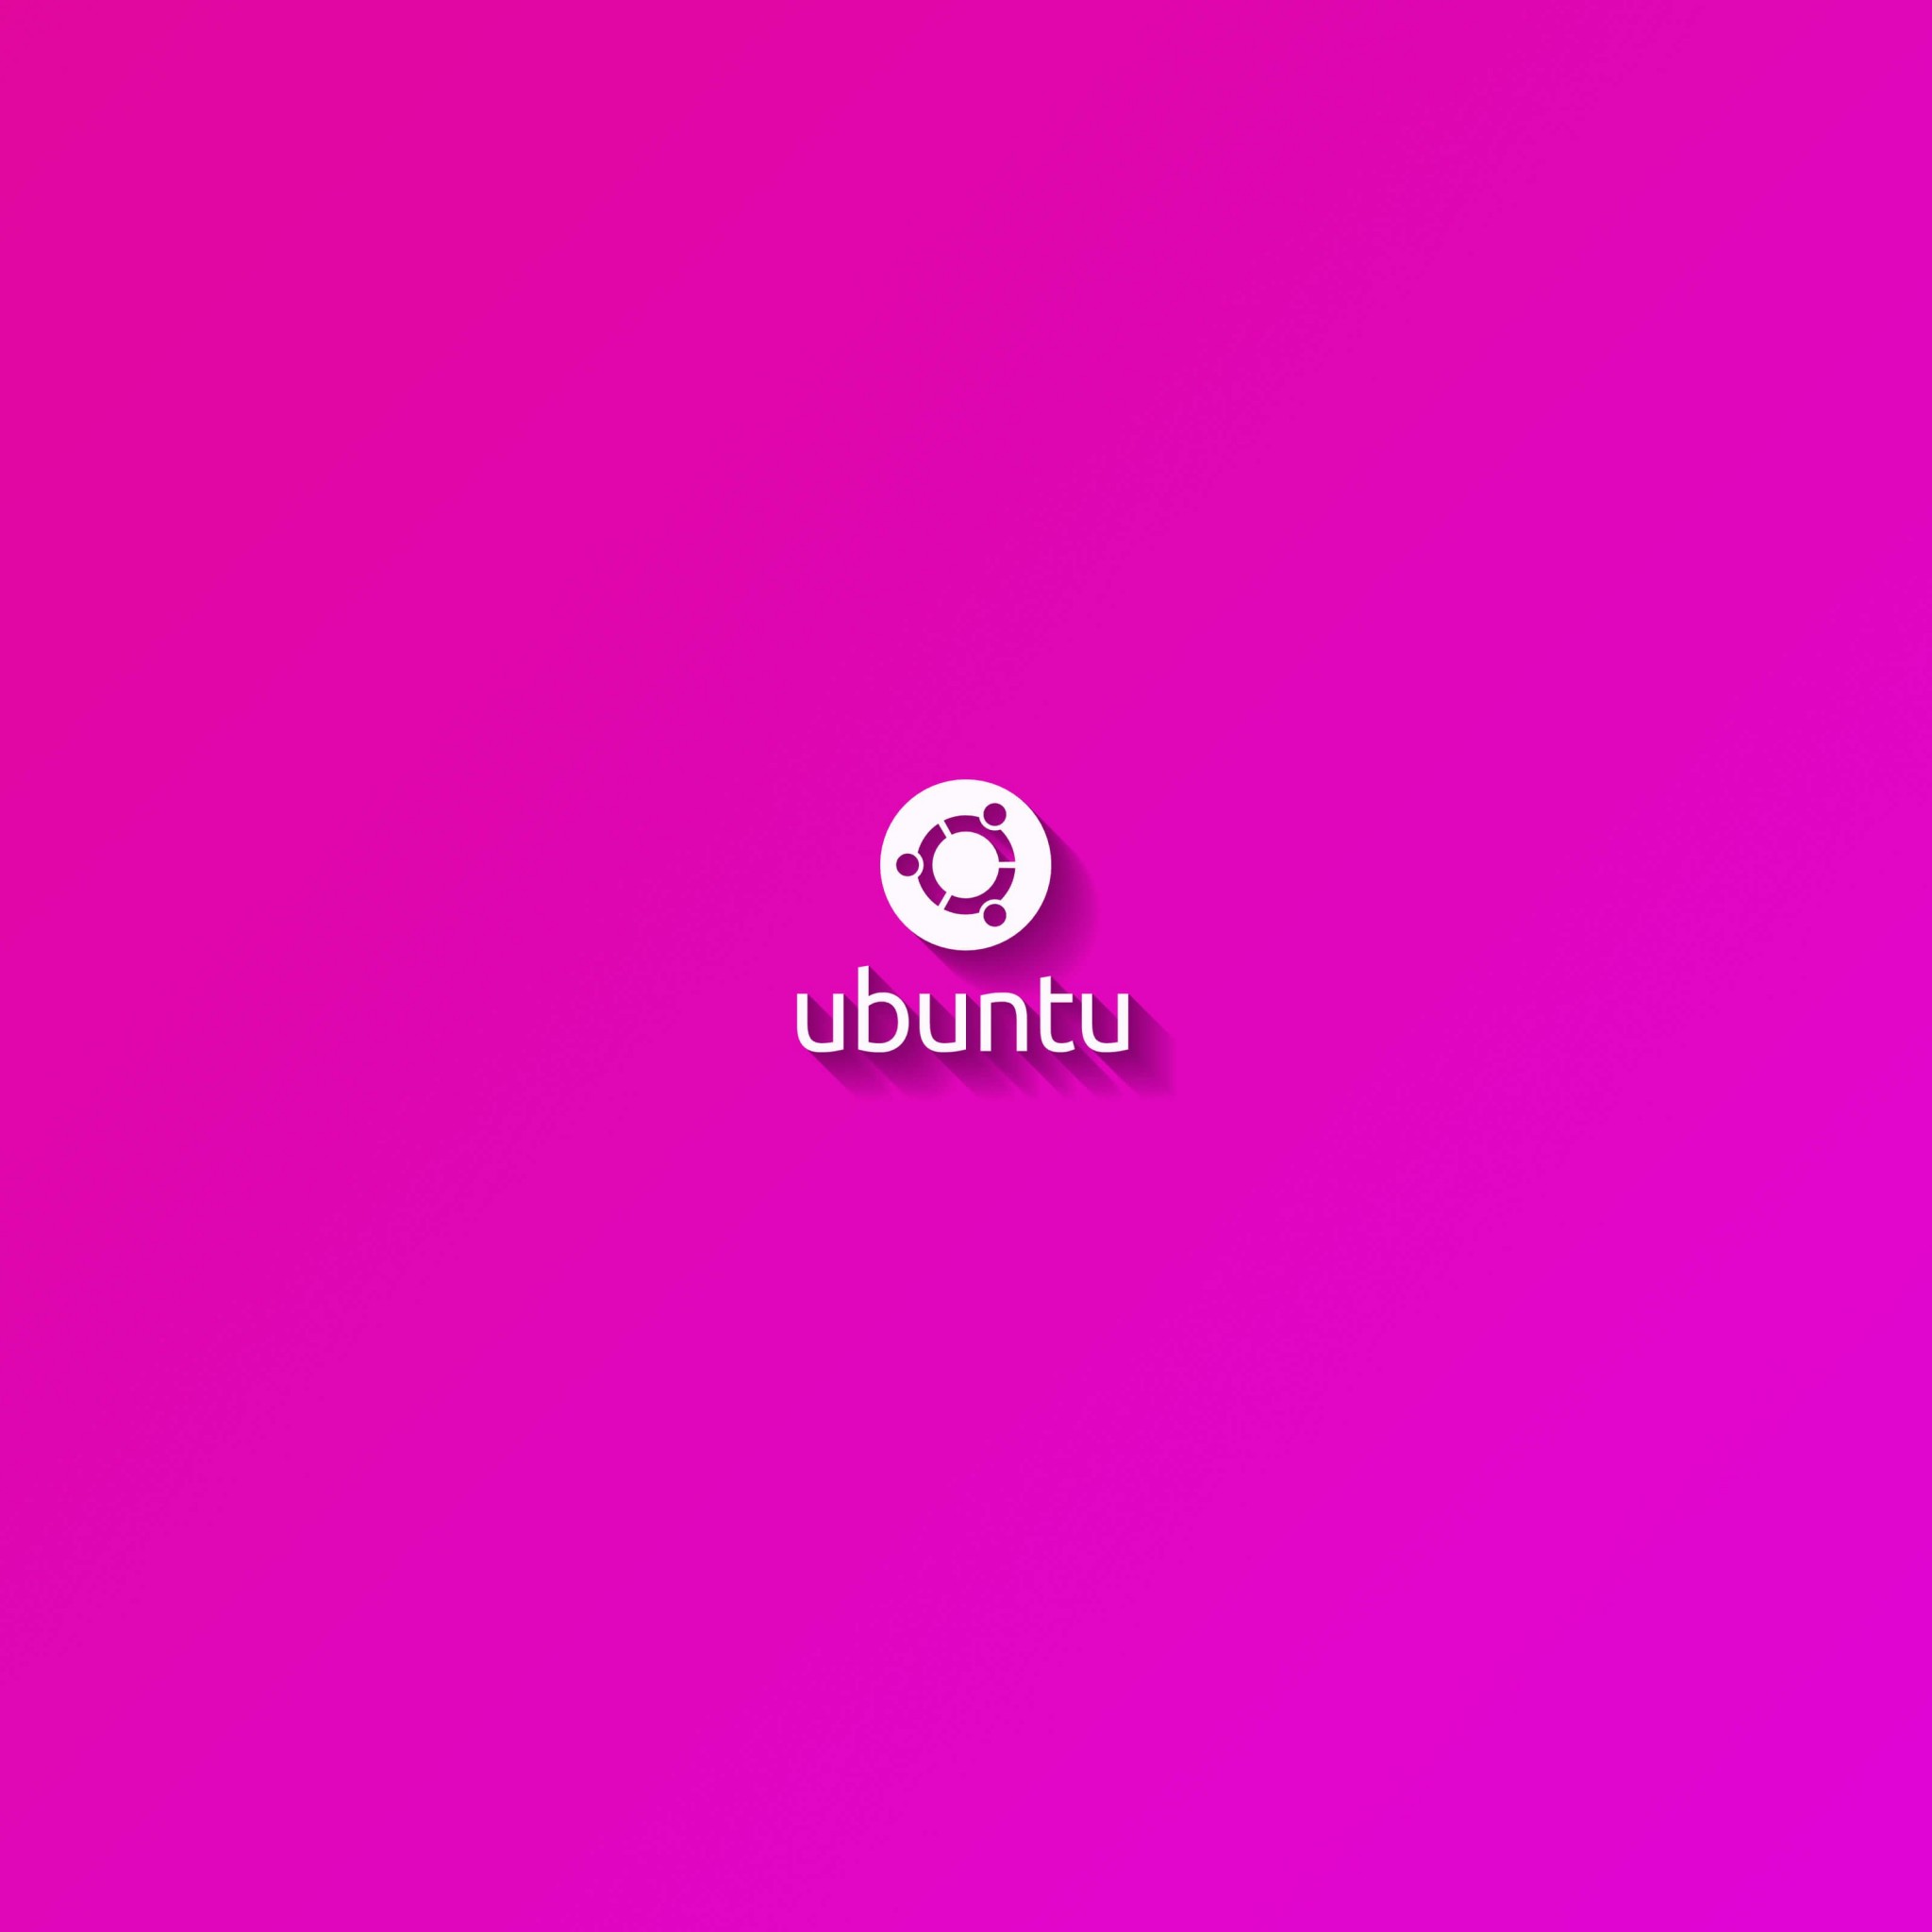 Ubuntu Flat Shadow Pink Wallpaper for Google Nexus 9